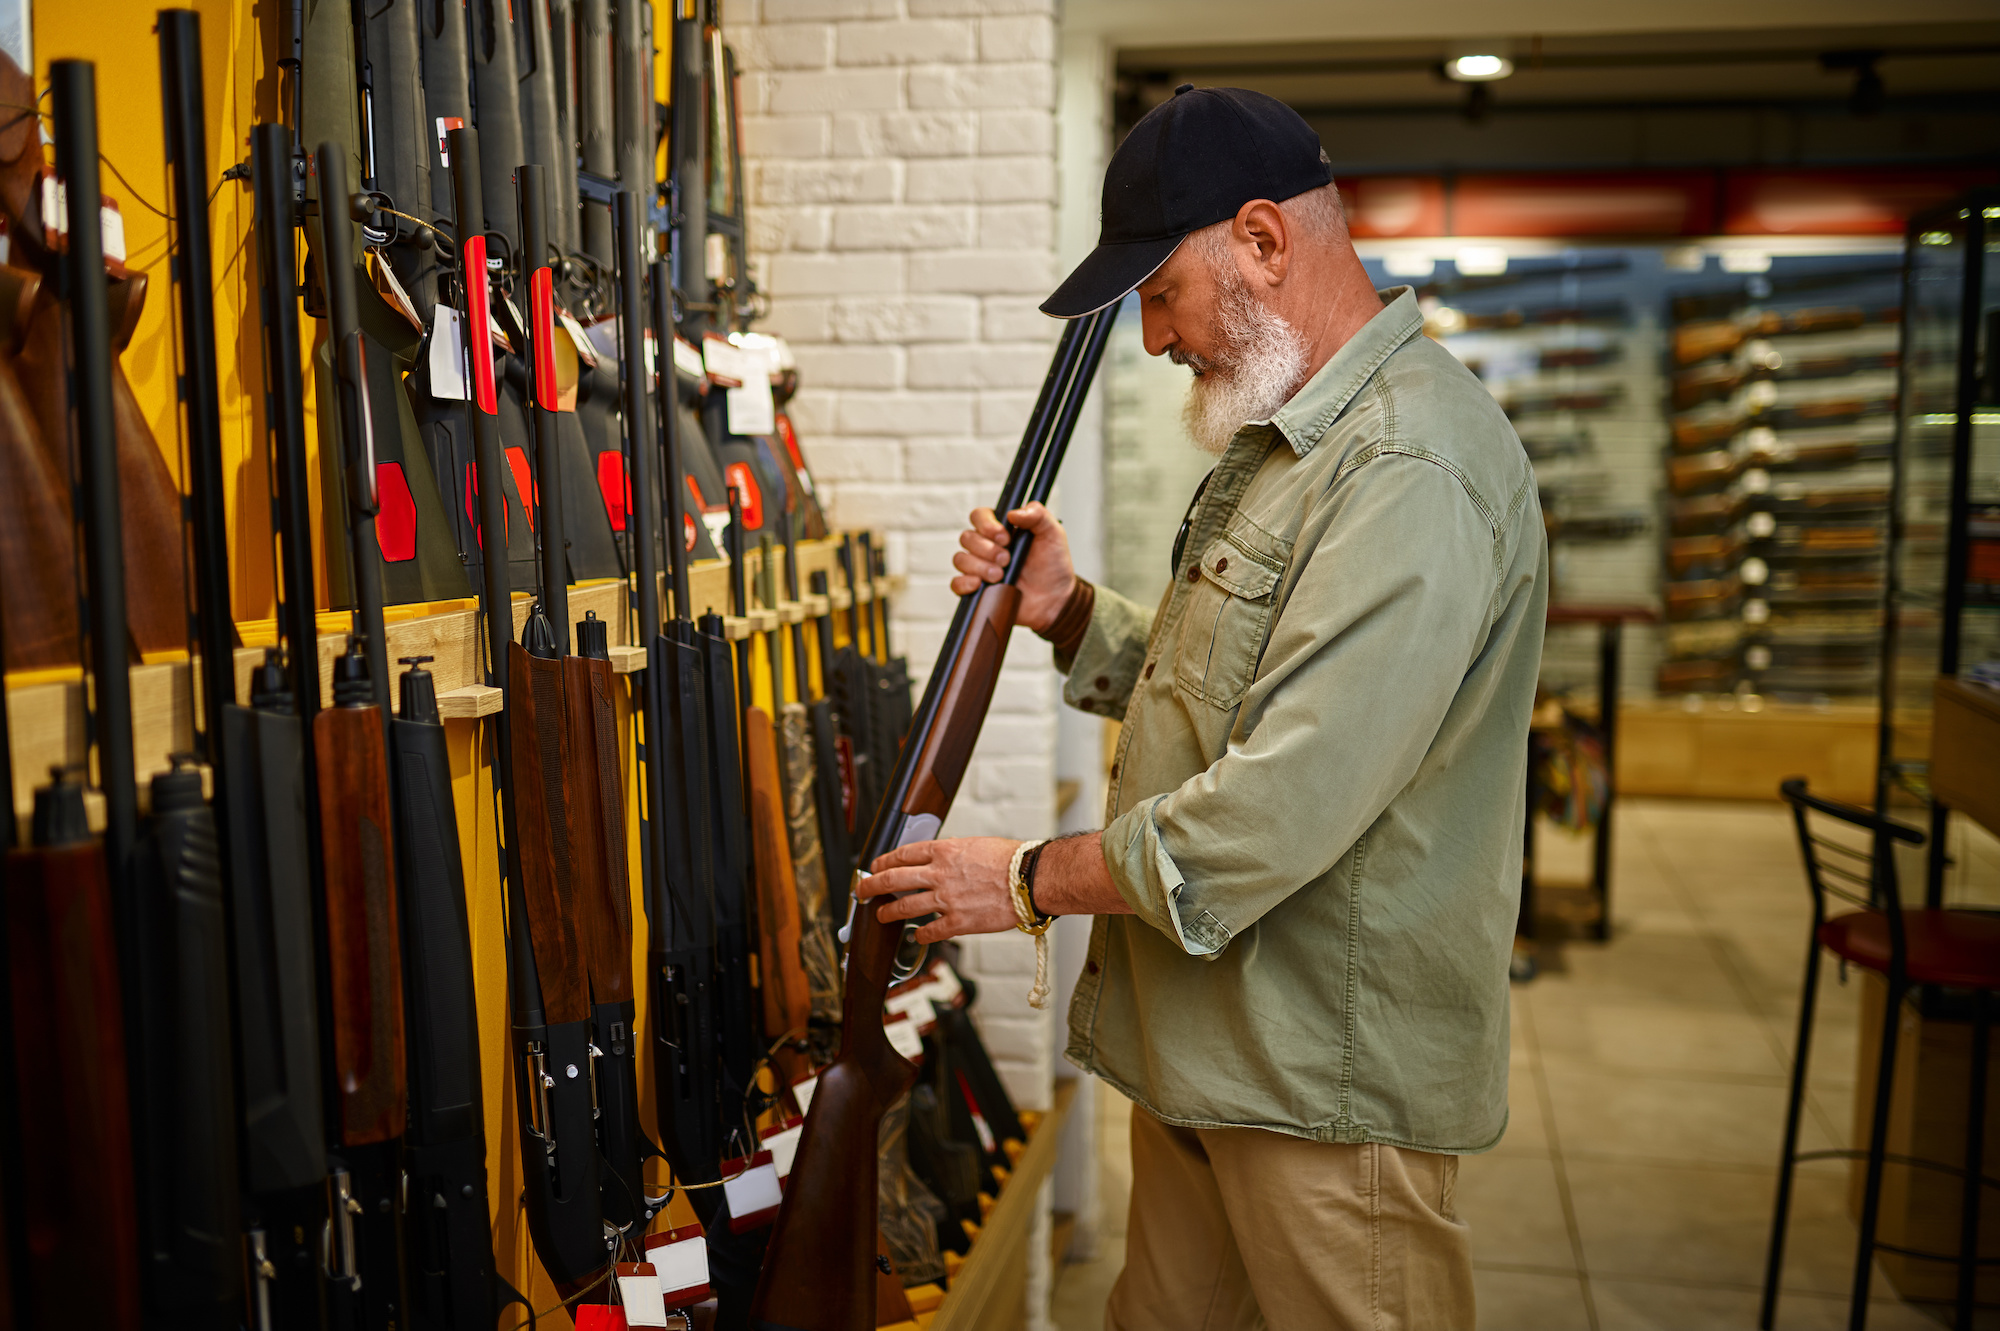 Oregon Prepares to Freeze Gun Sales in “De Facto Gun Ban”